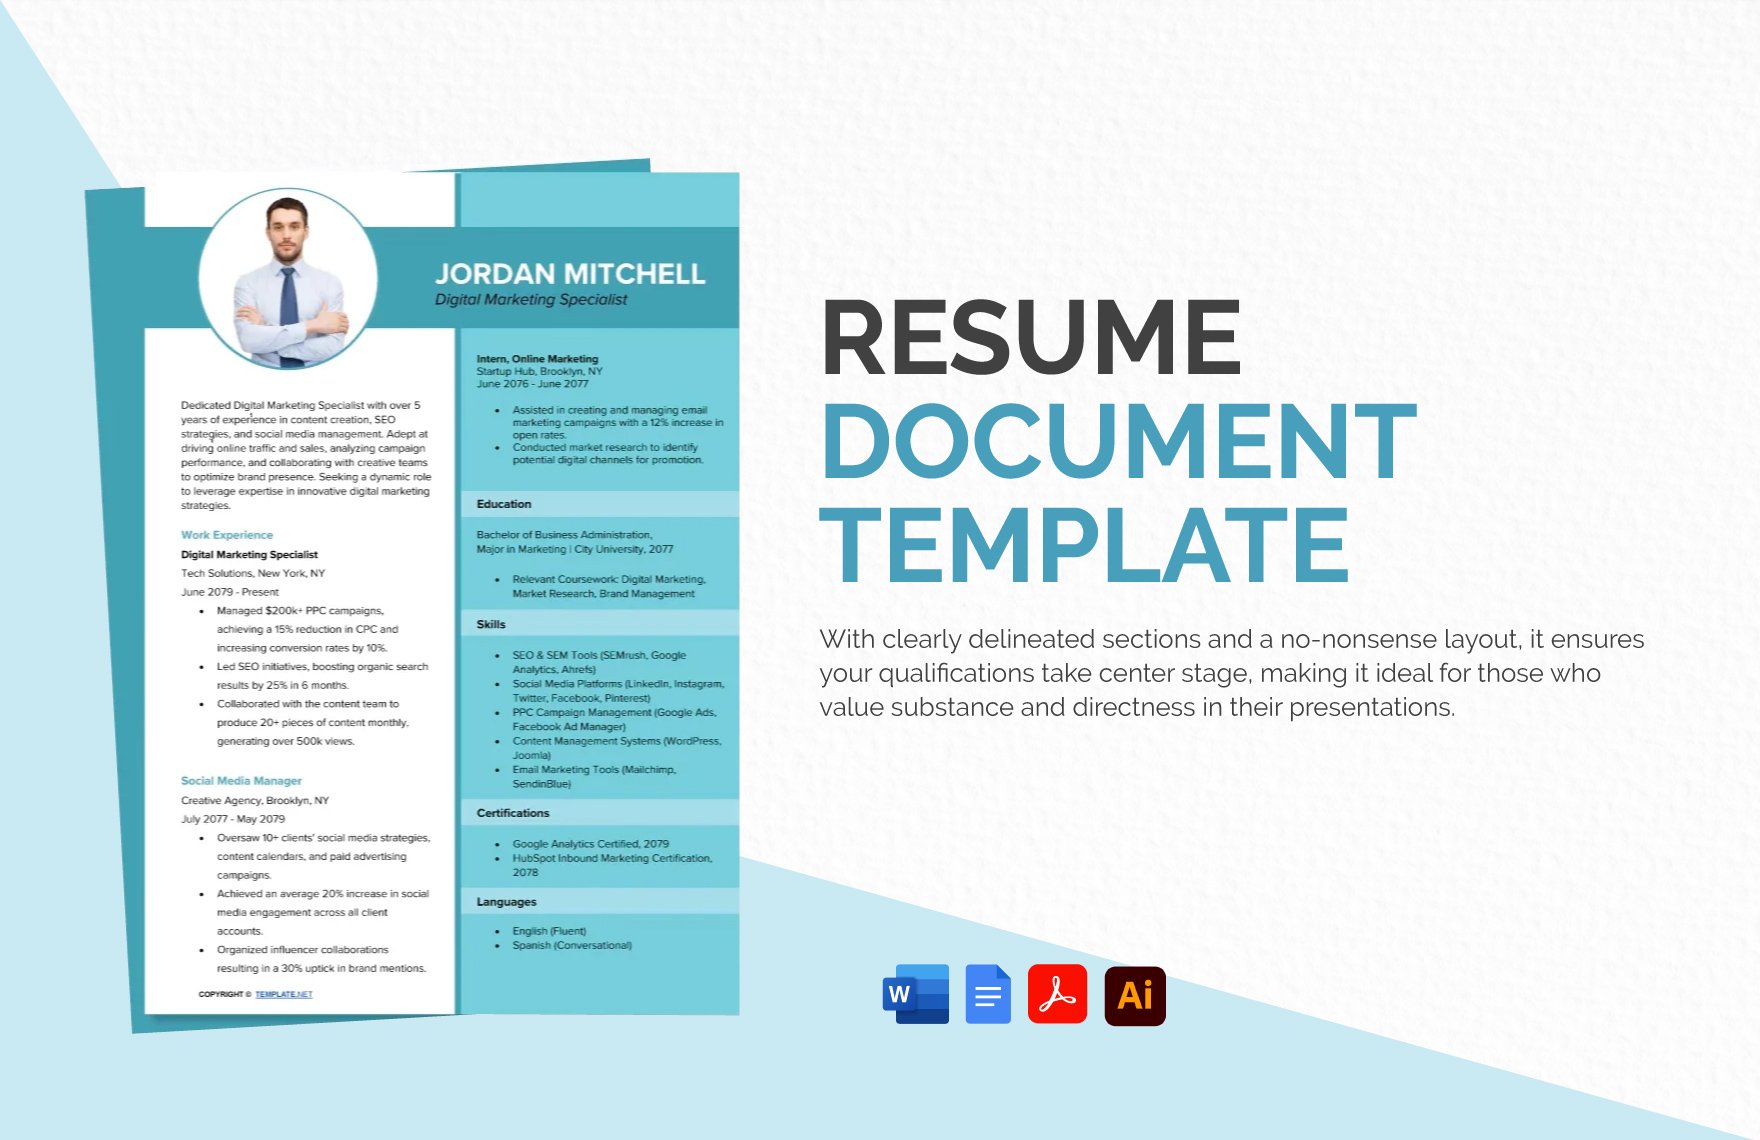 Resume Document Template